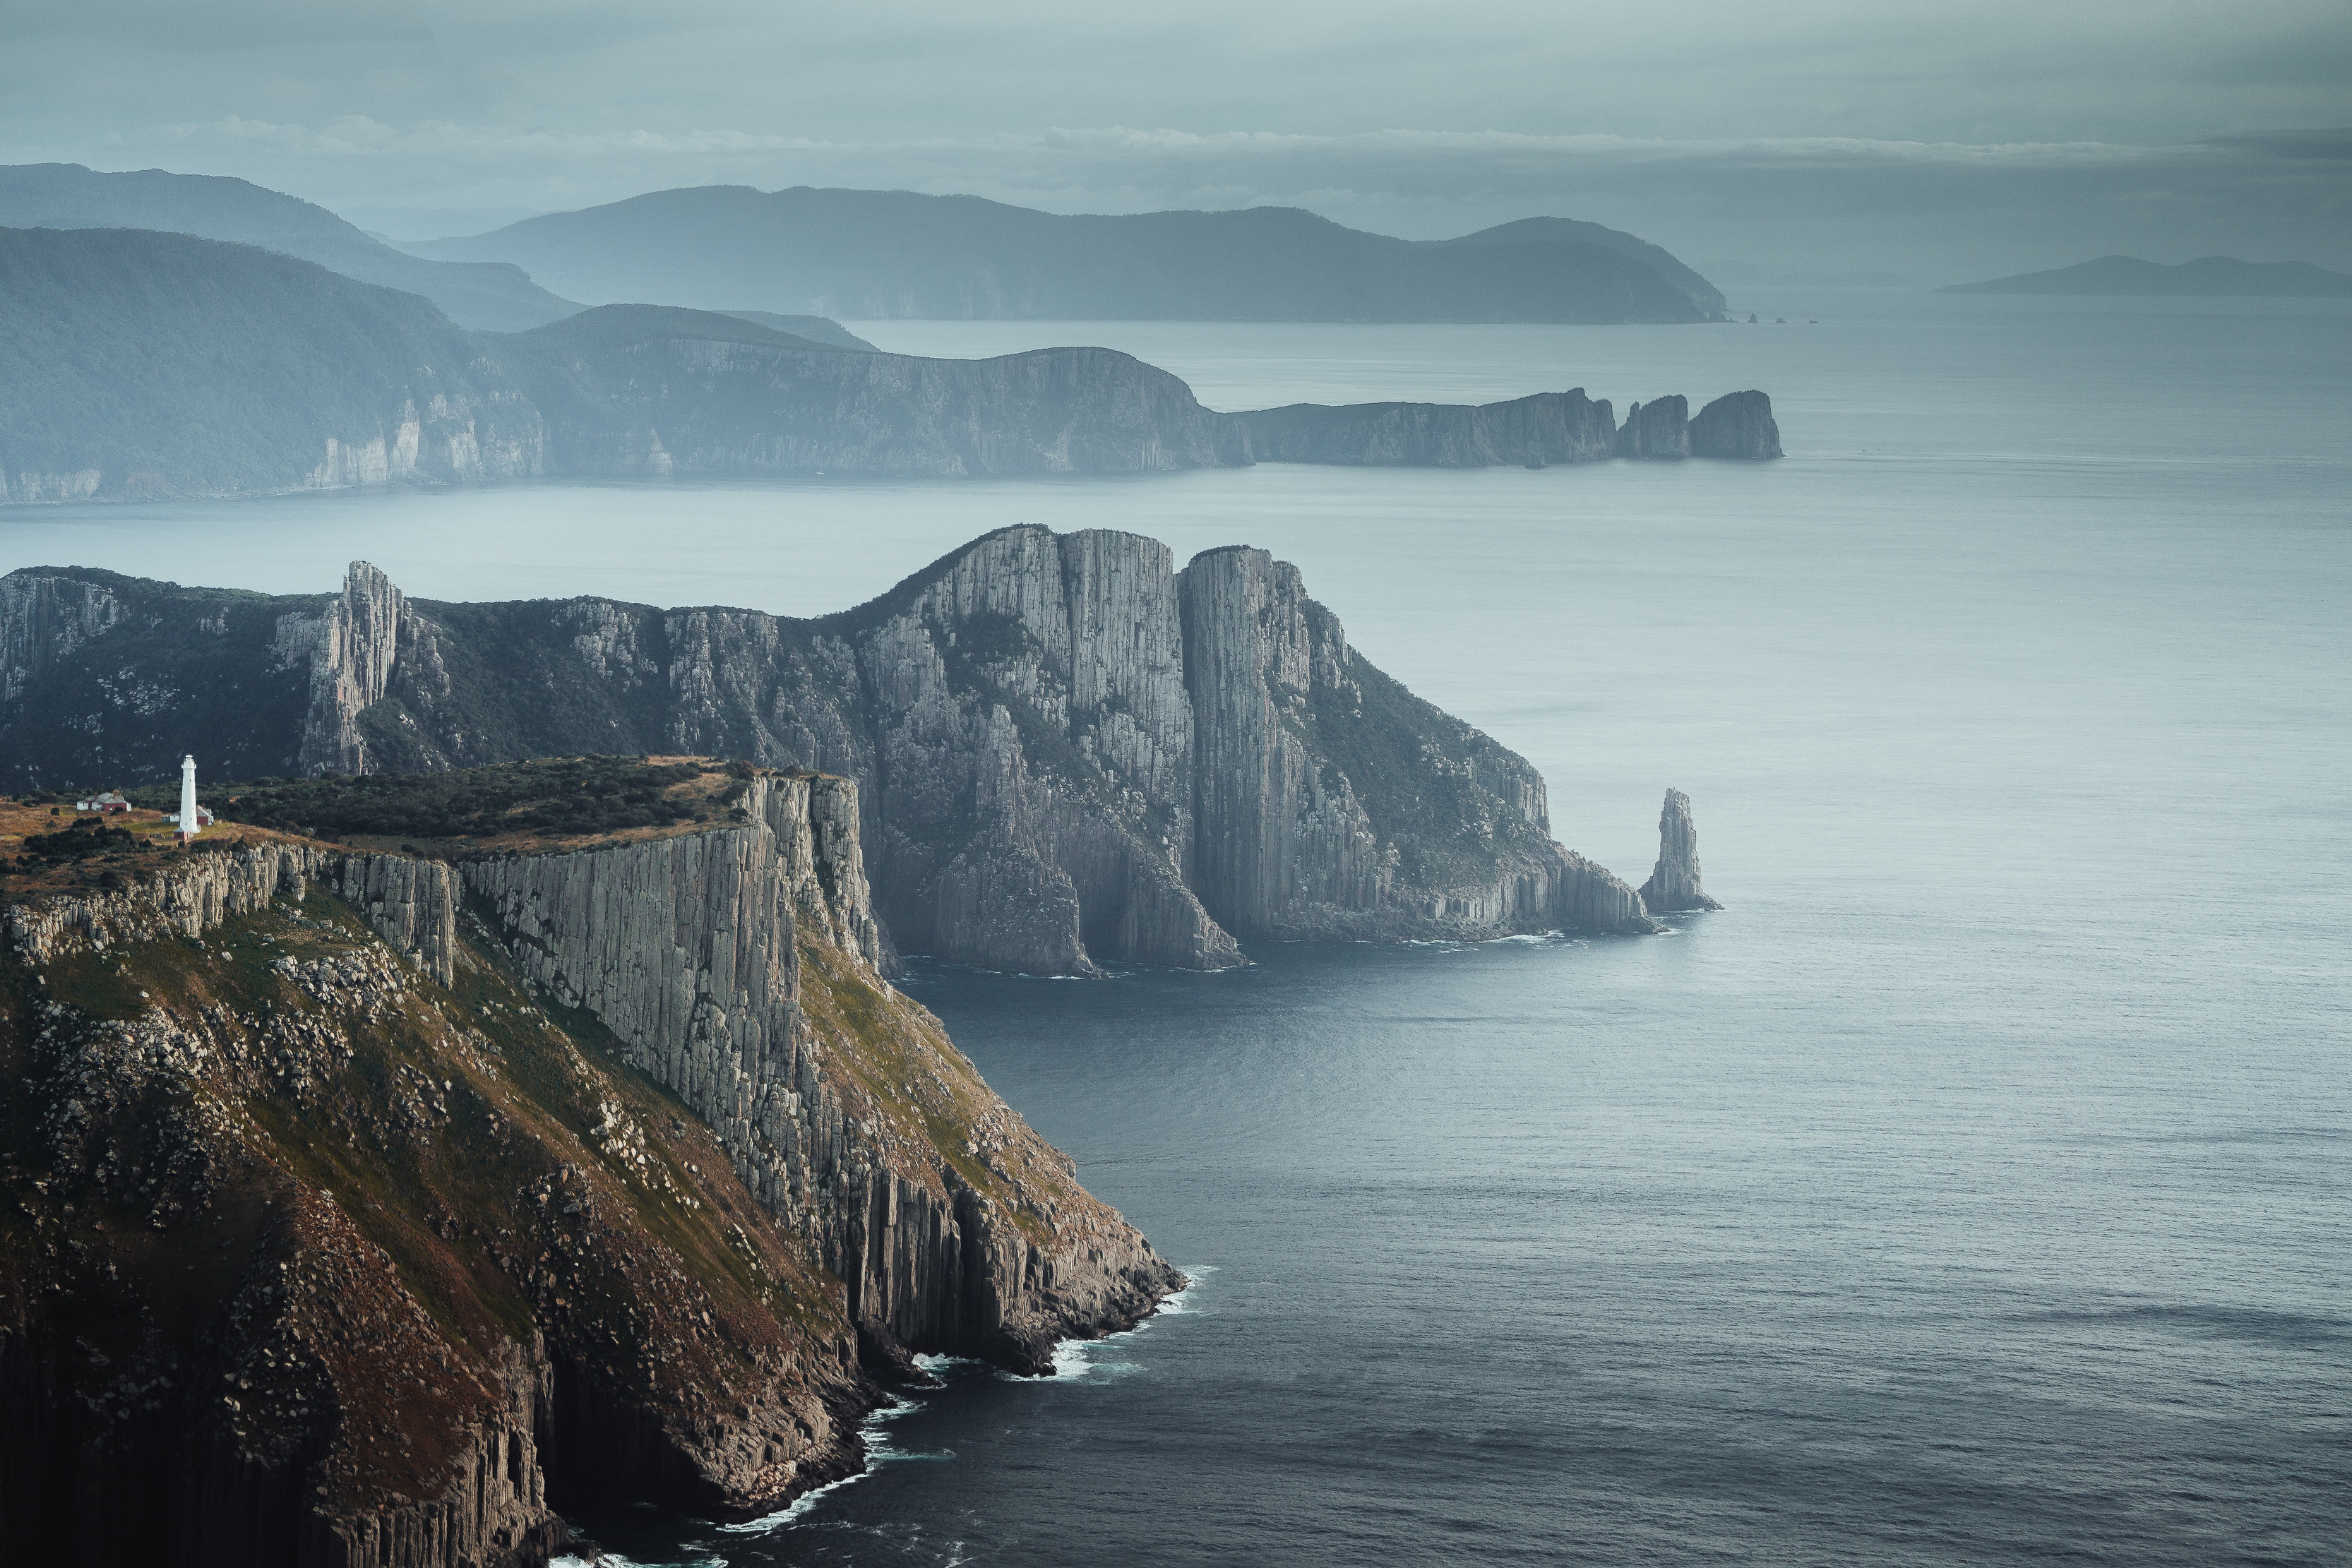 Cliff top at Tasman Island, located just off the south-eastern coast of Tasmania